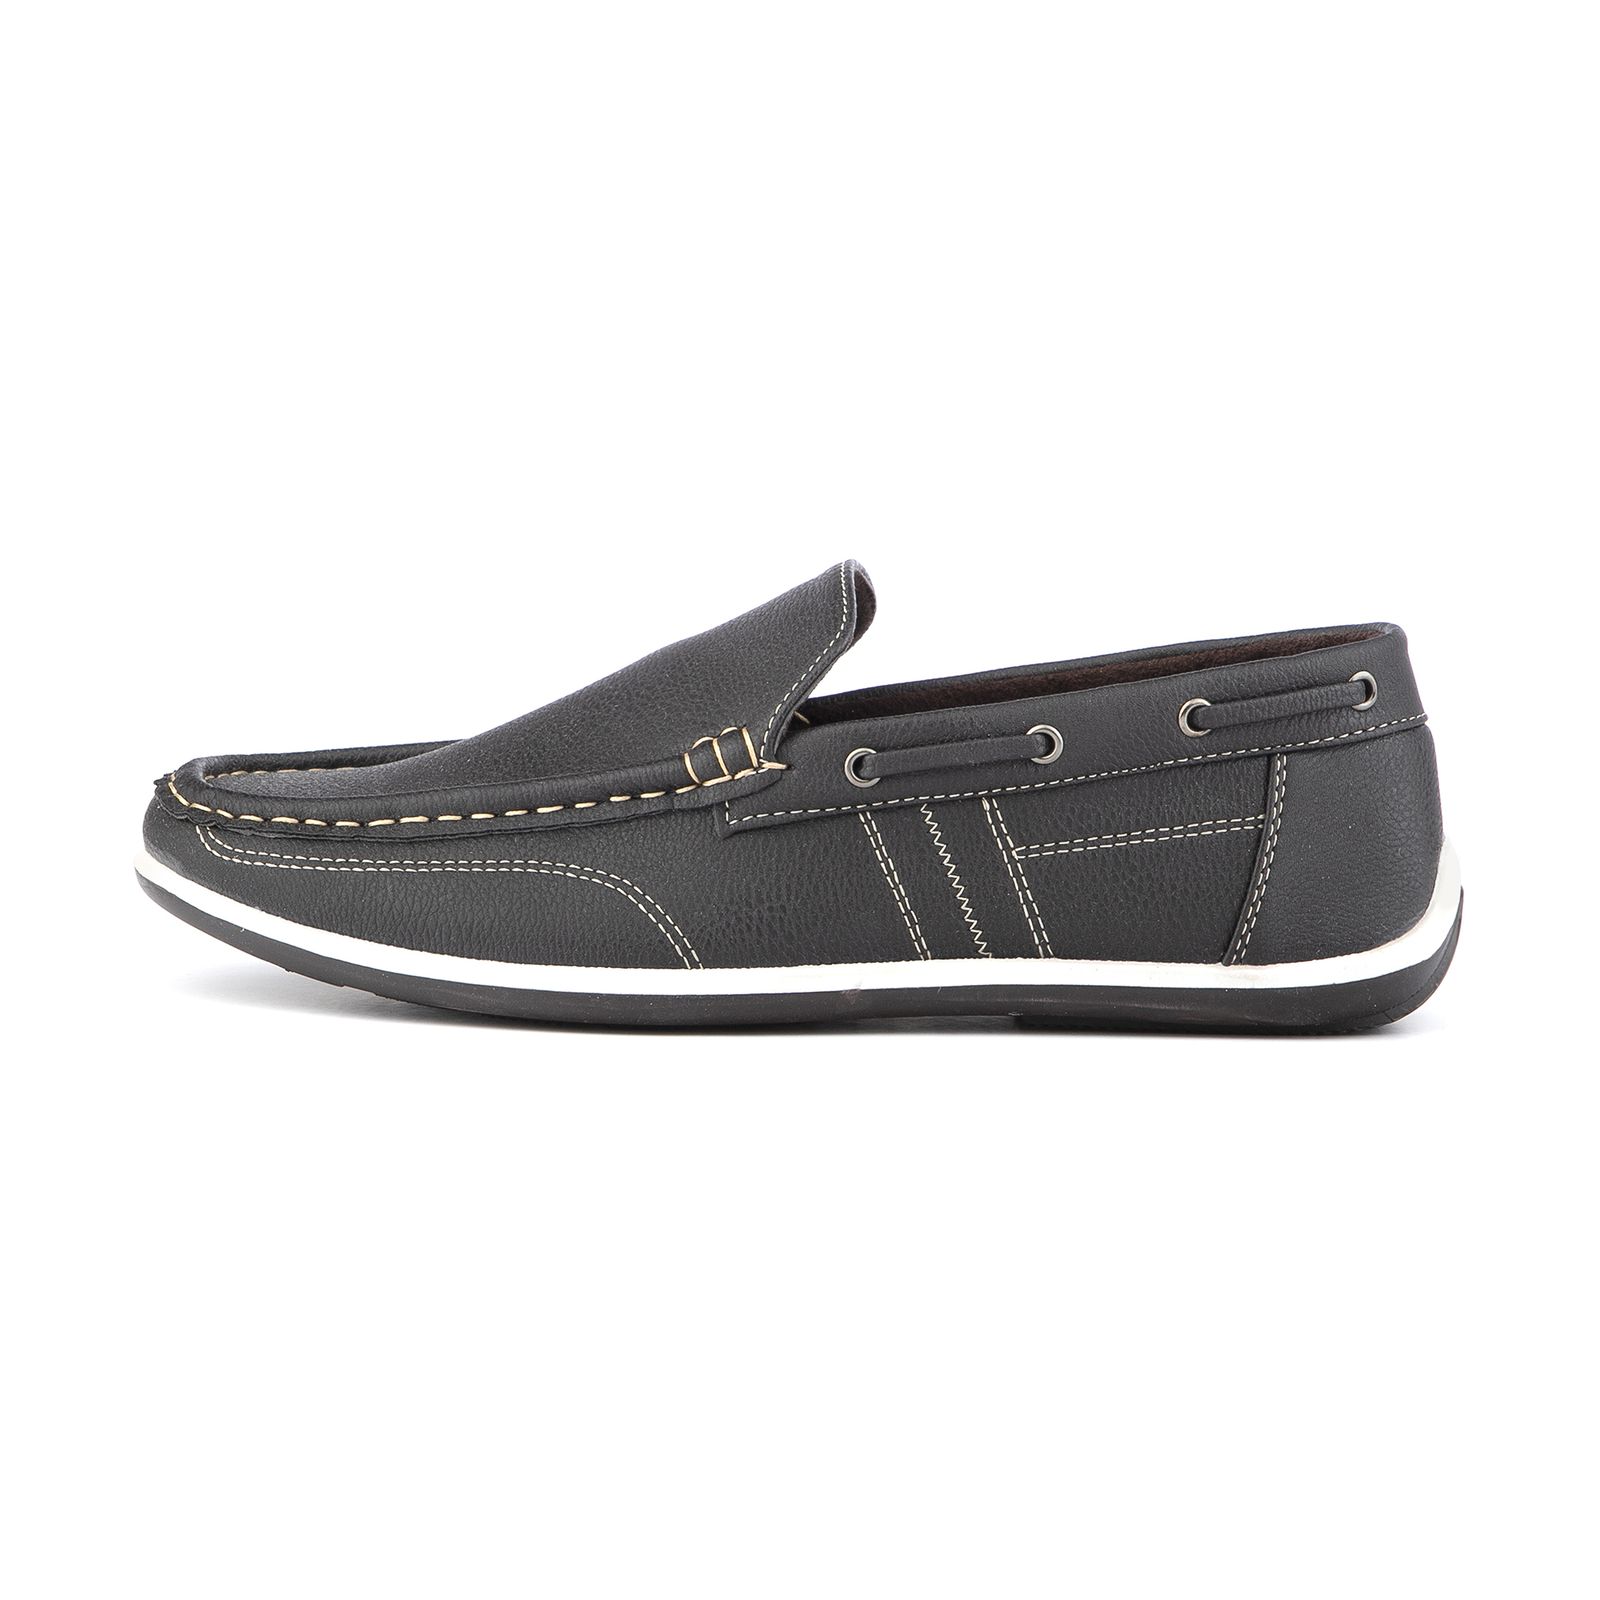 کفش روزمره مردانه پاما مدل K52 کد G1209 -  - 1